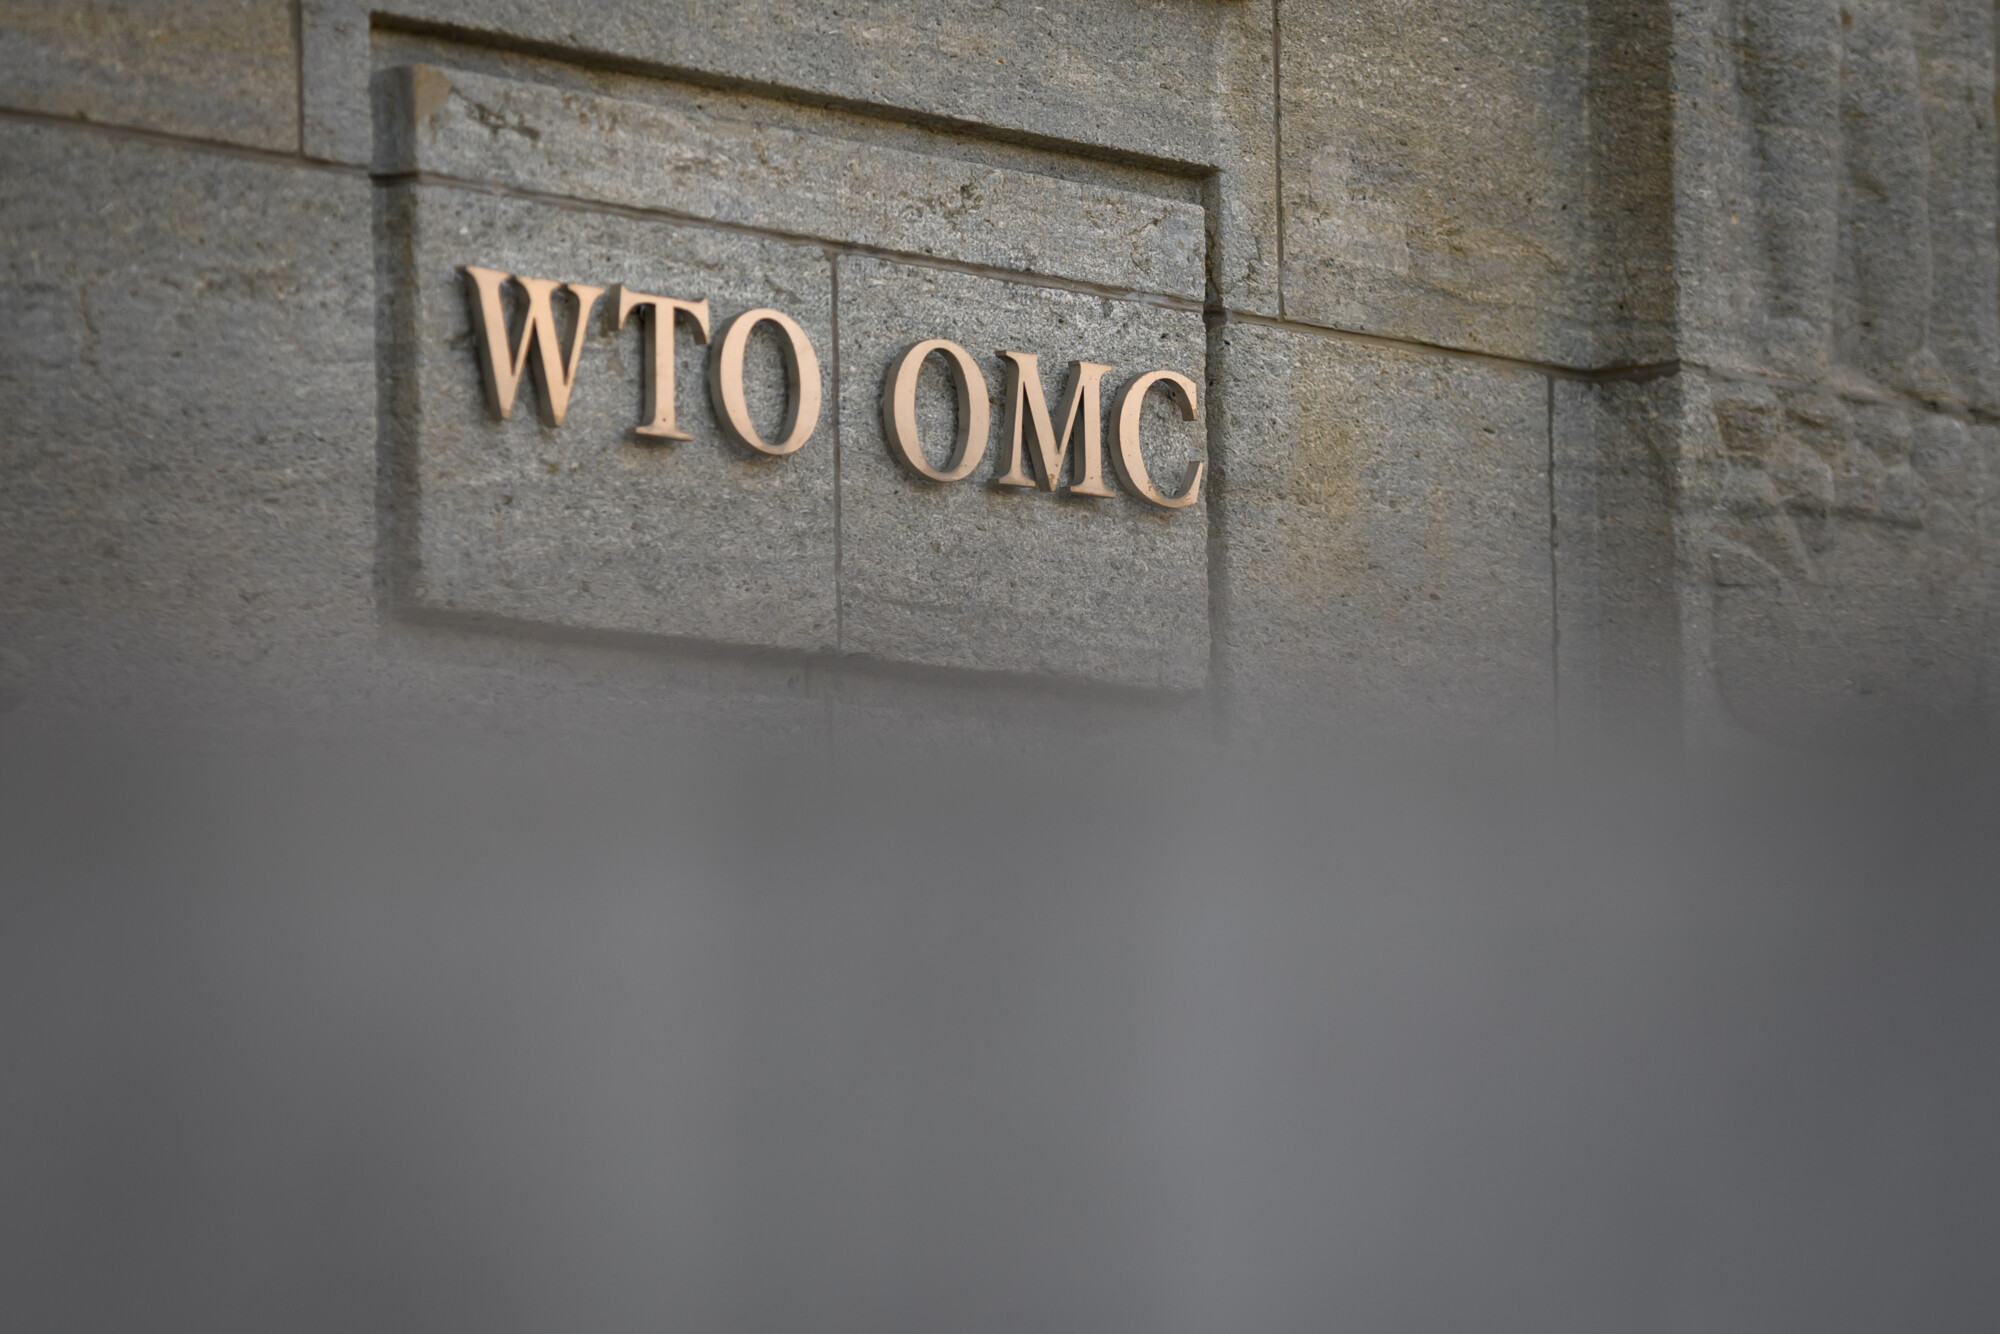 Canada, Russia Join Australian WTO Barley Dispute with China